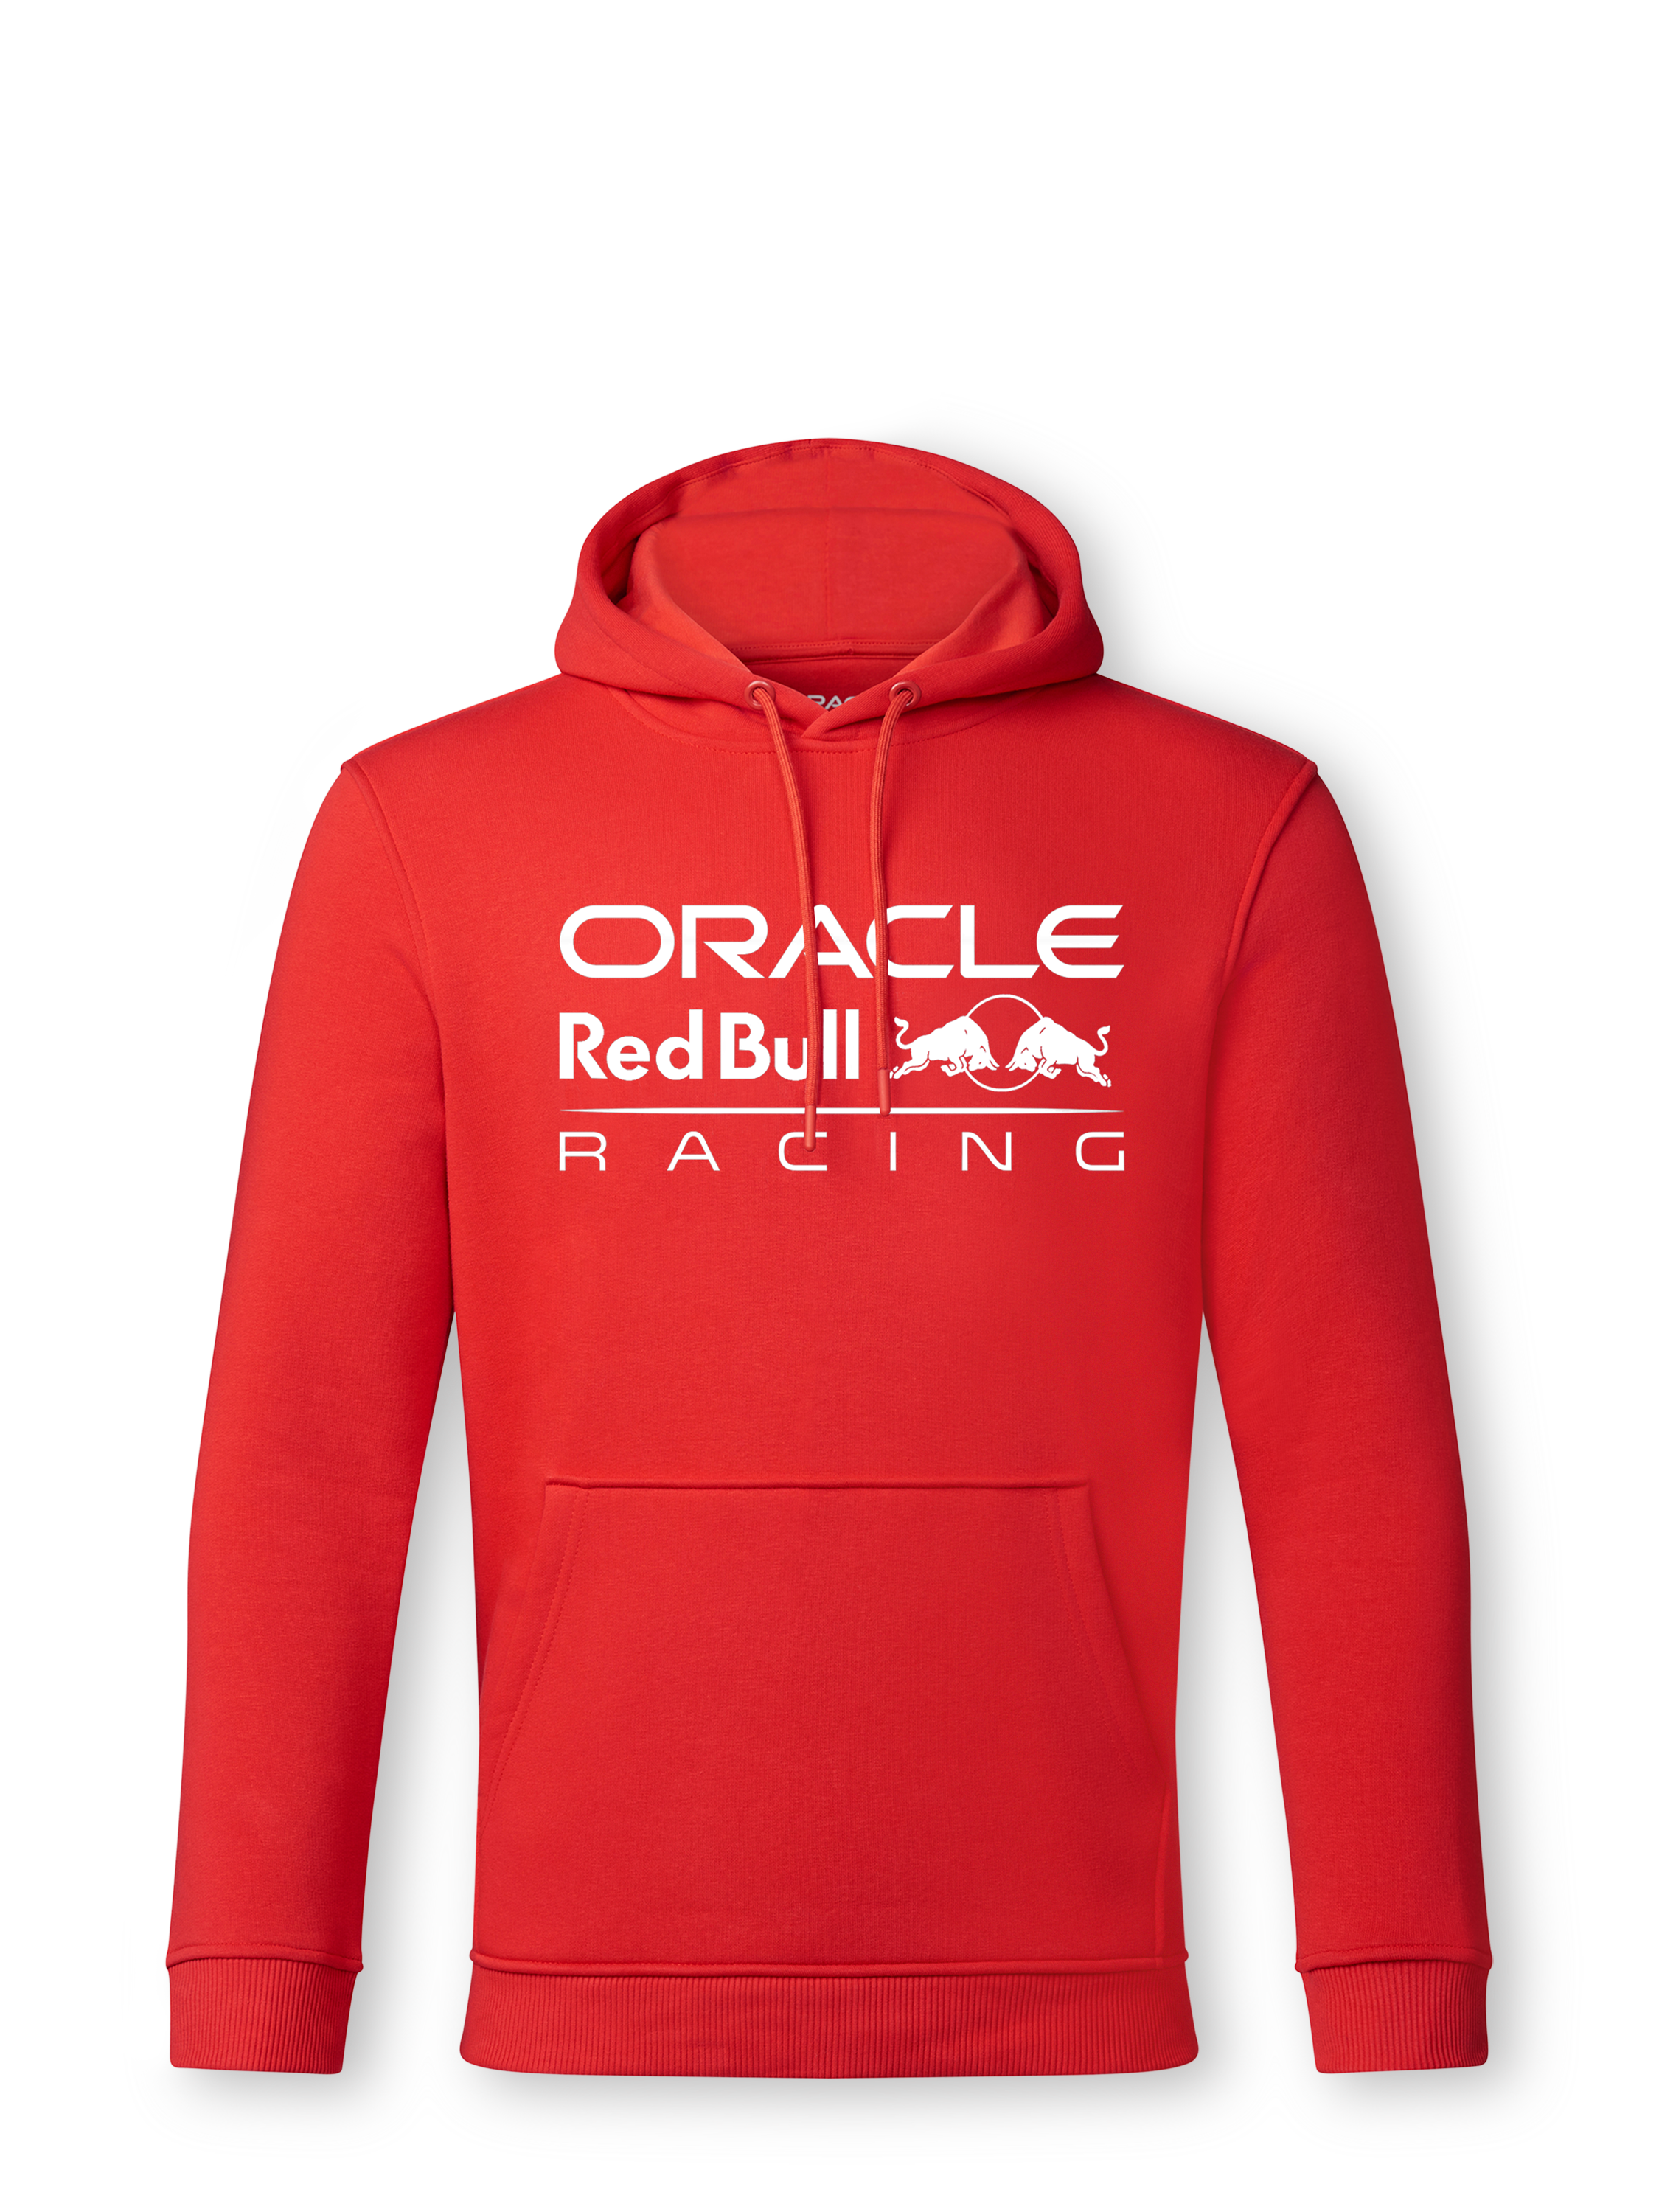 Oracle Red Bull Racing Shop: Oracle Red Bull Racing Bilingual Monopoly